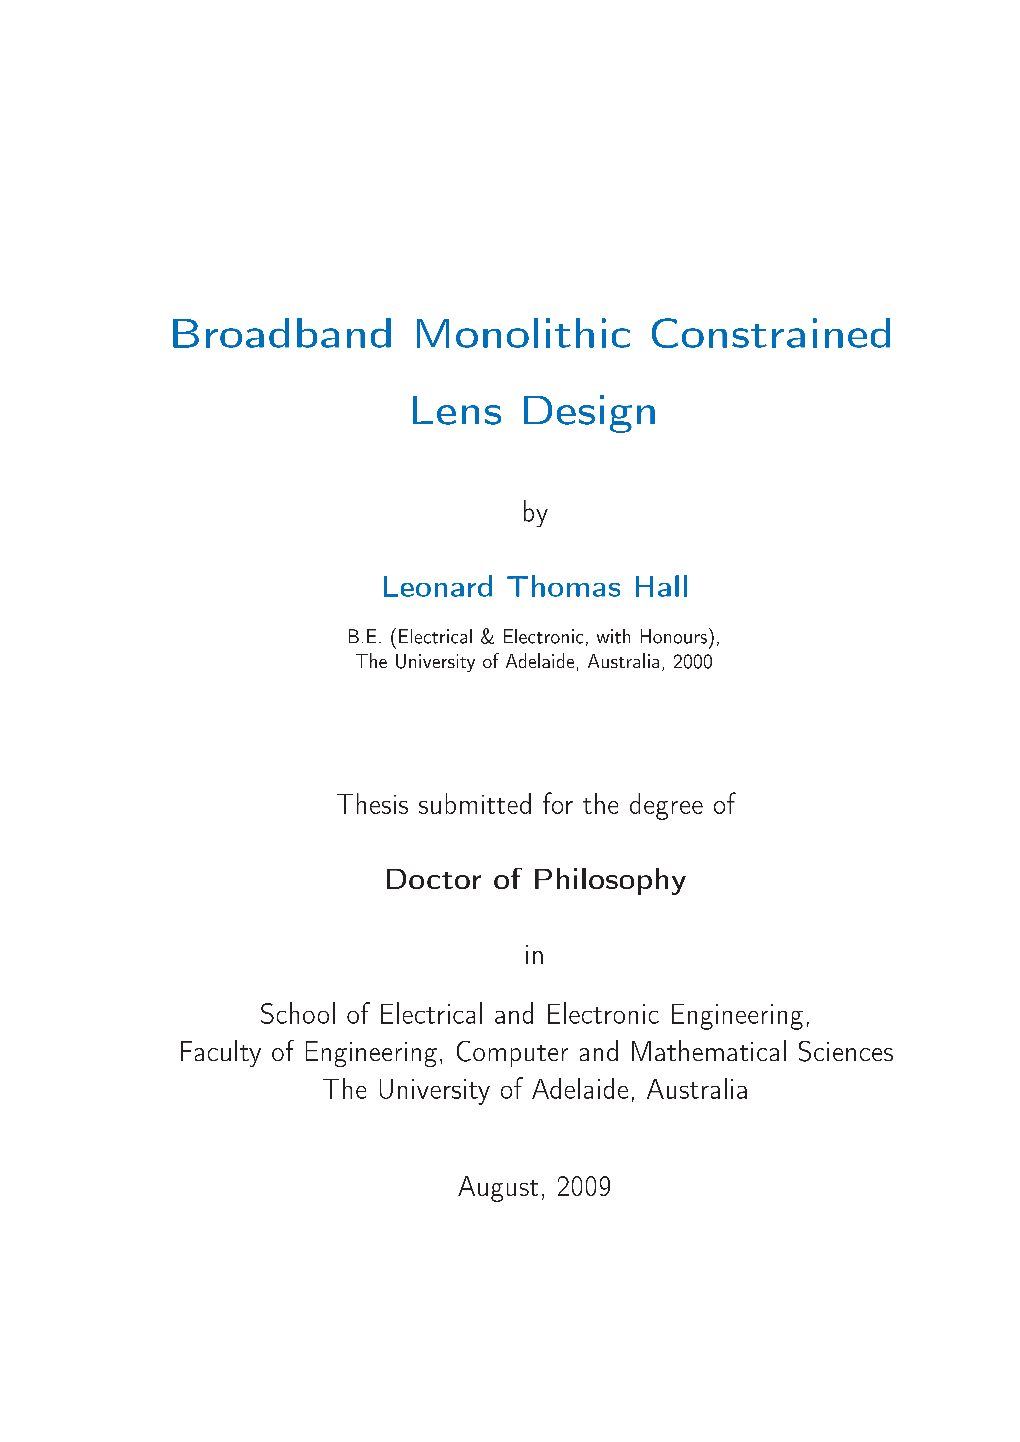 Broadband Monolithic Constrained Lens Design